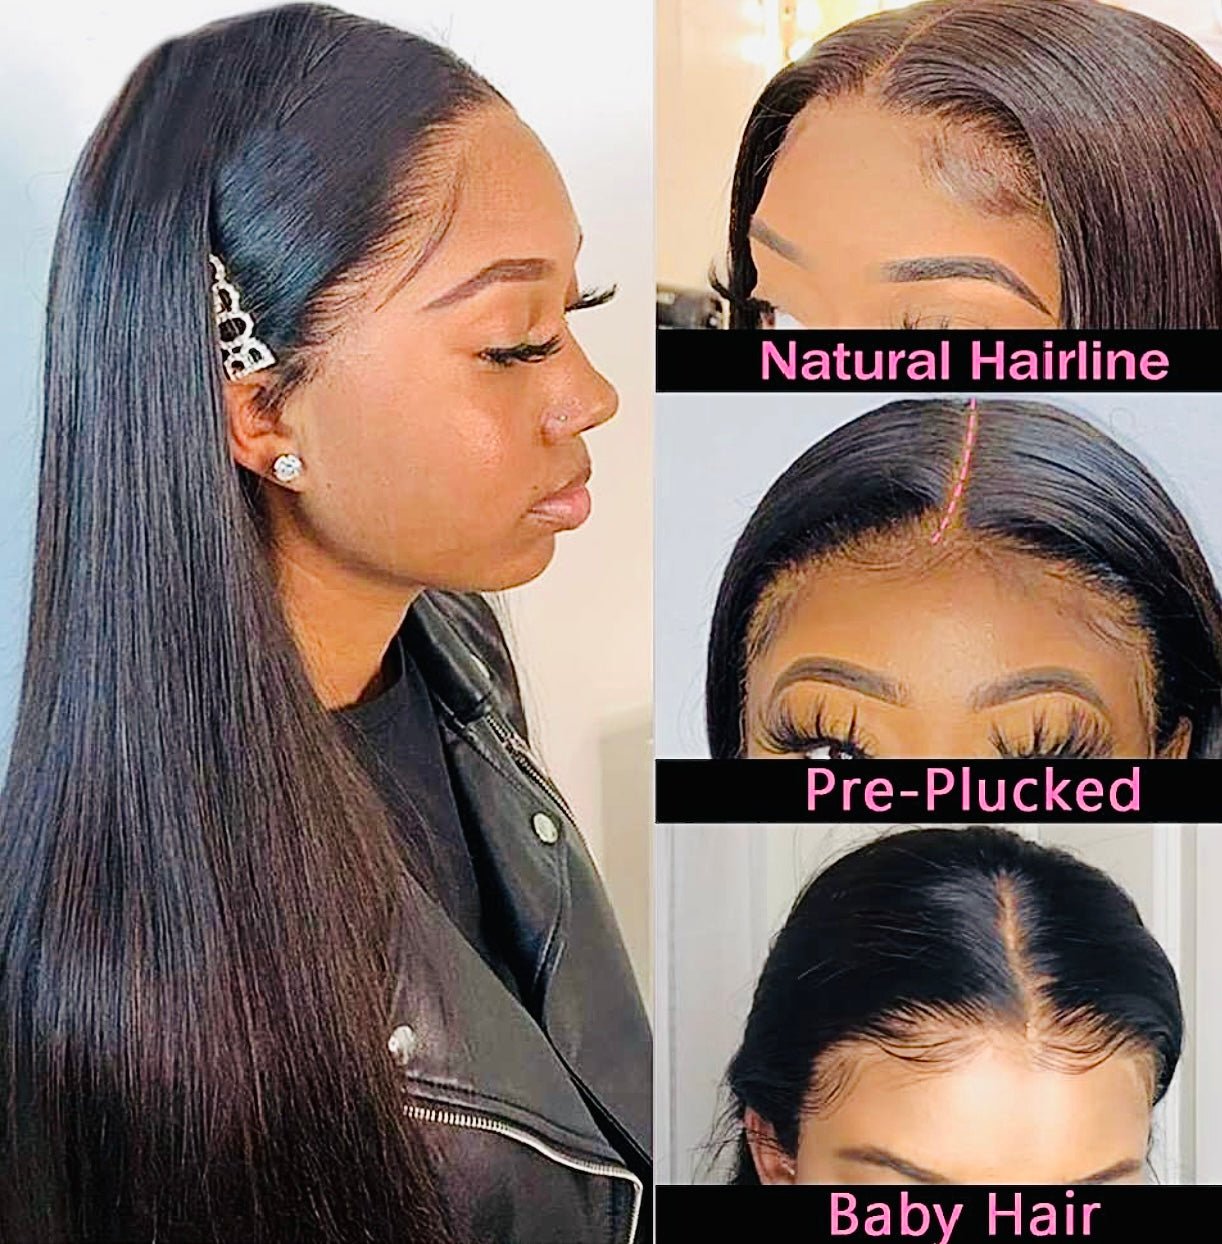 Pre Plucked Brazilian Bob Short Human Hair Wigs With Bangs Perfect Short  Pixie Cut For Black Women From Newbeautyhair6, $21.89 | DHgate.Com